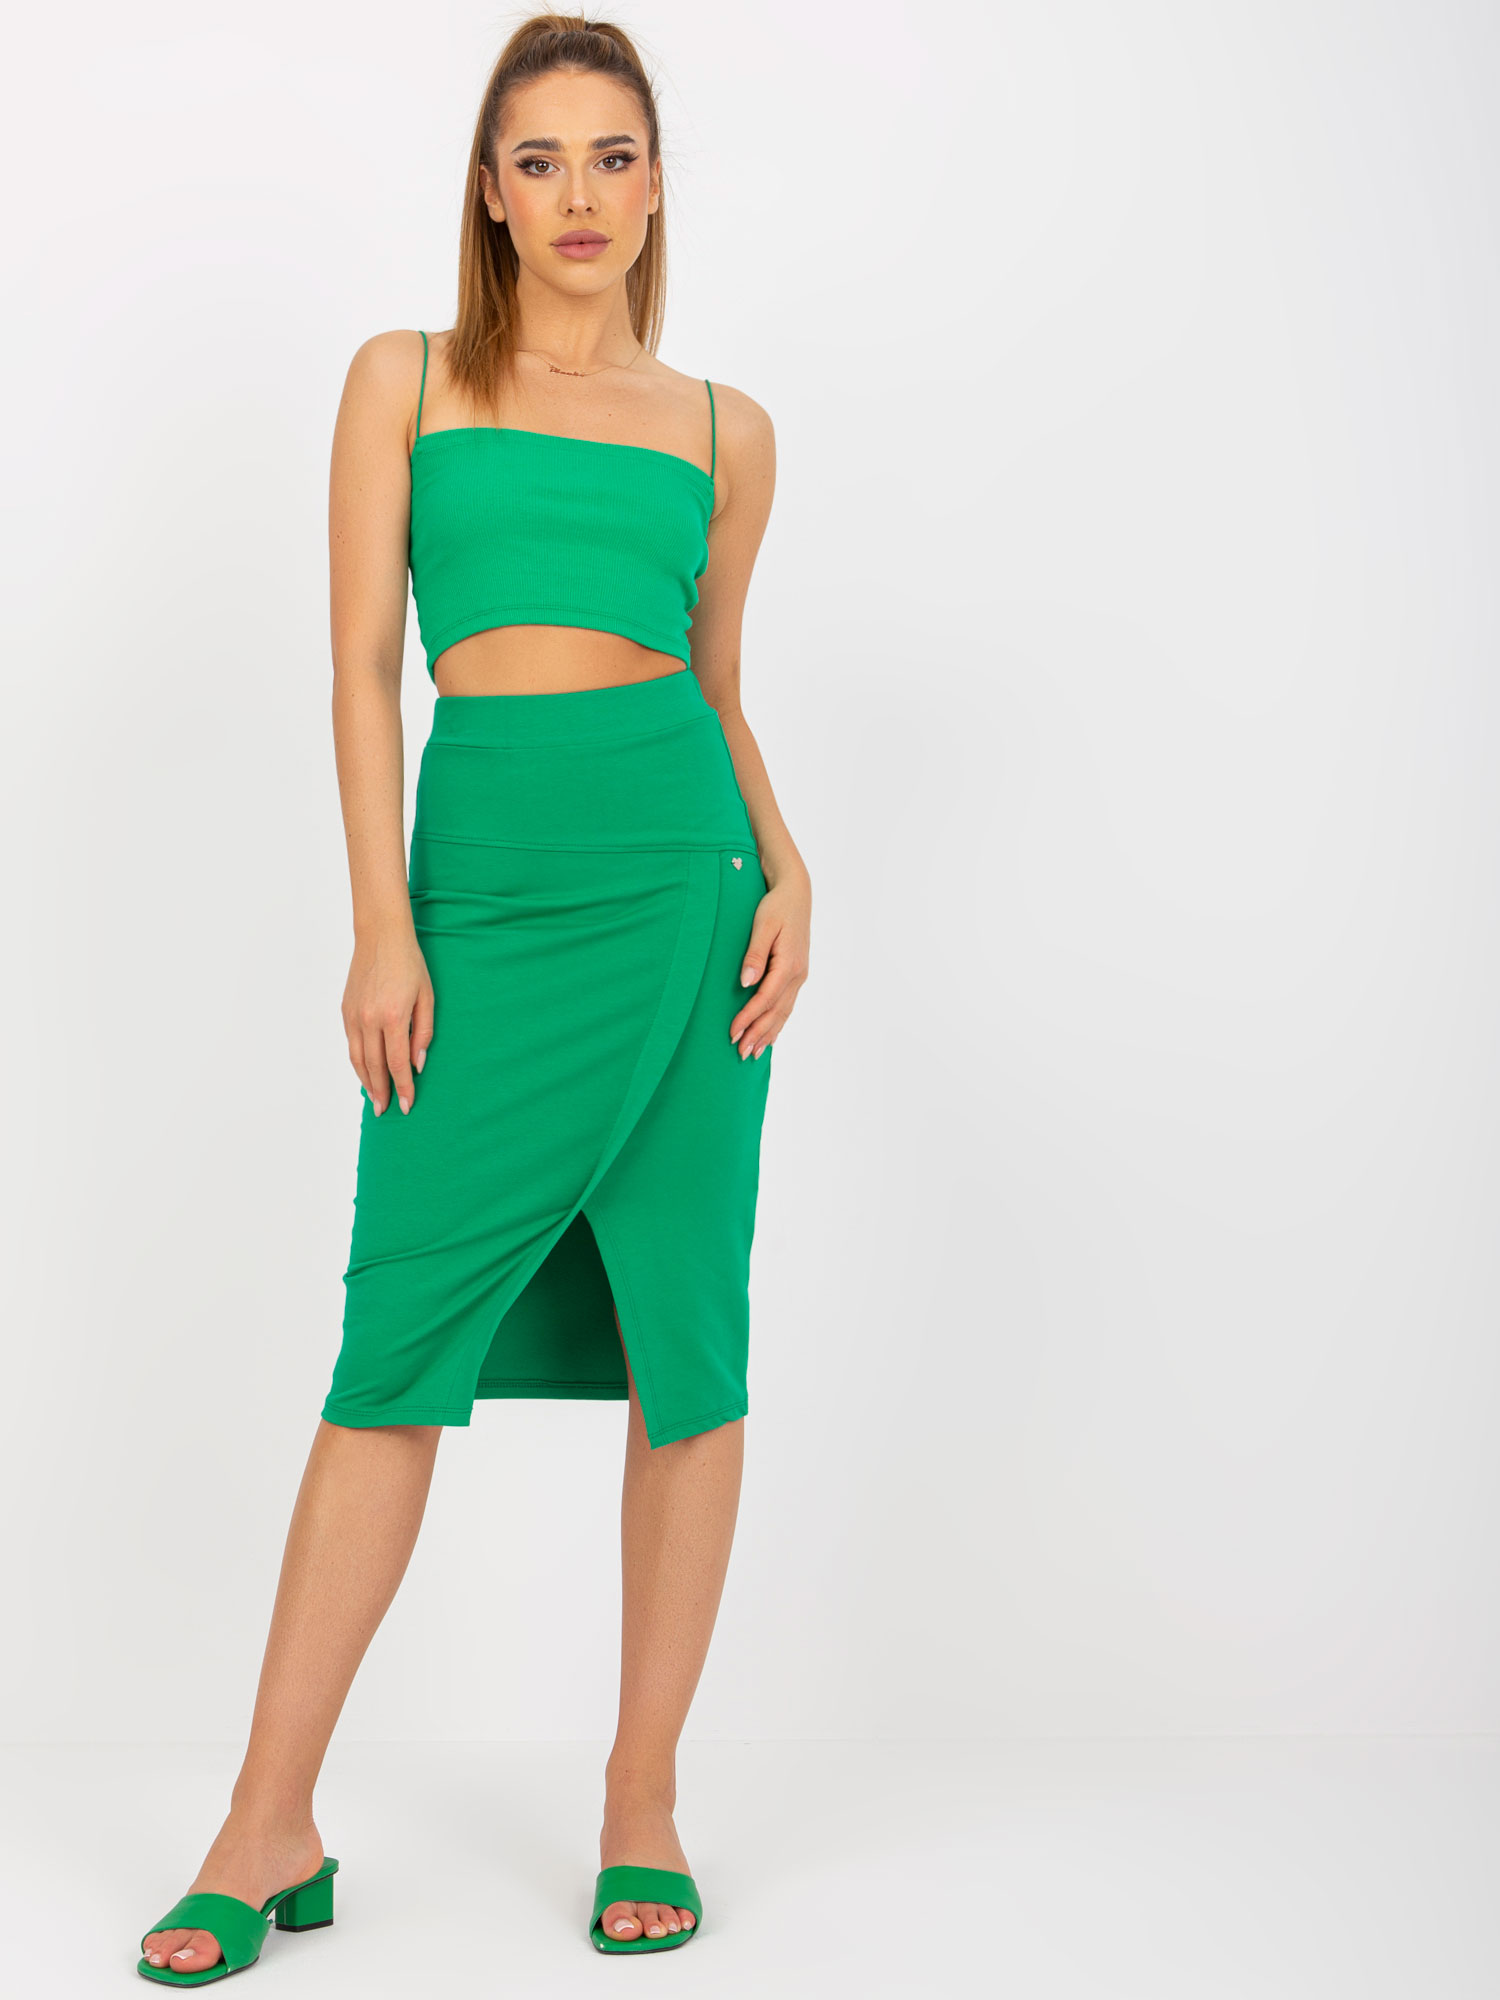 Basic green pencil skirt with slit